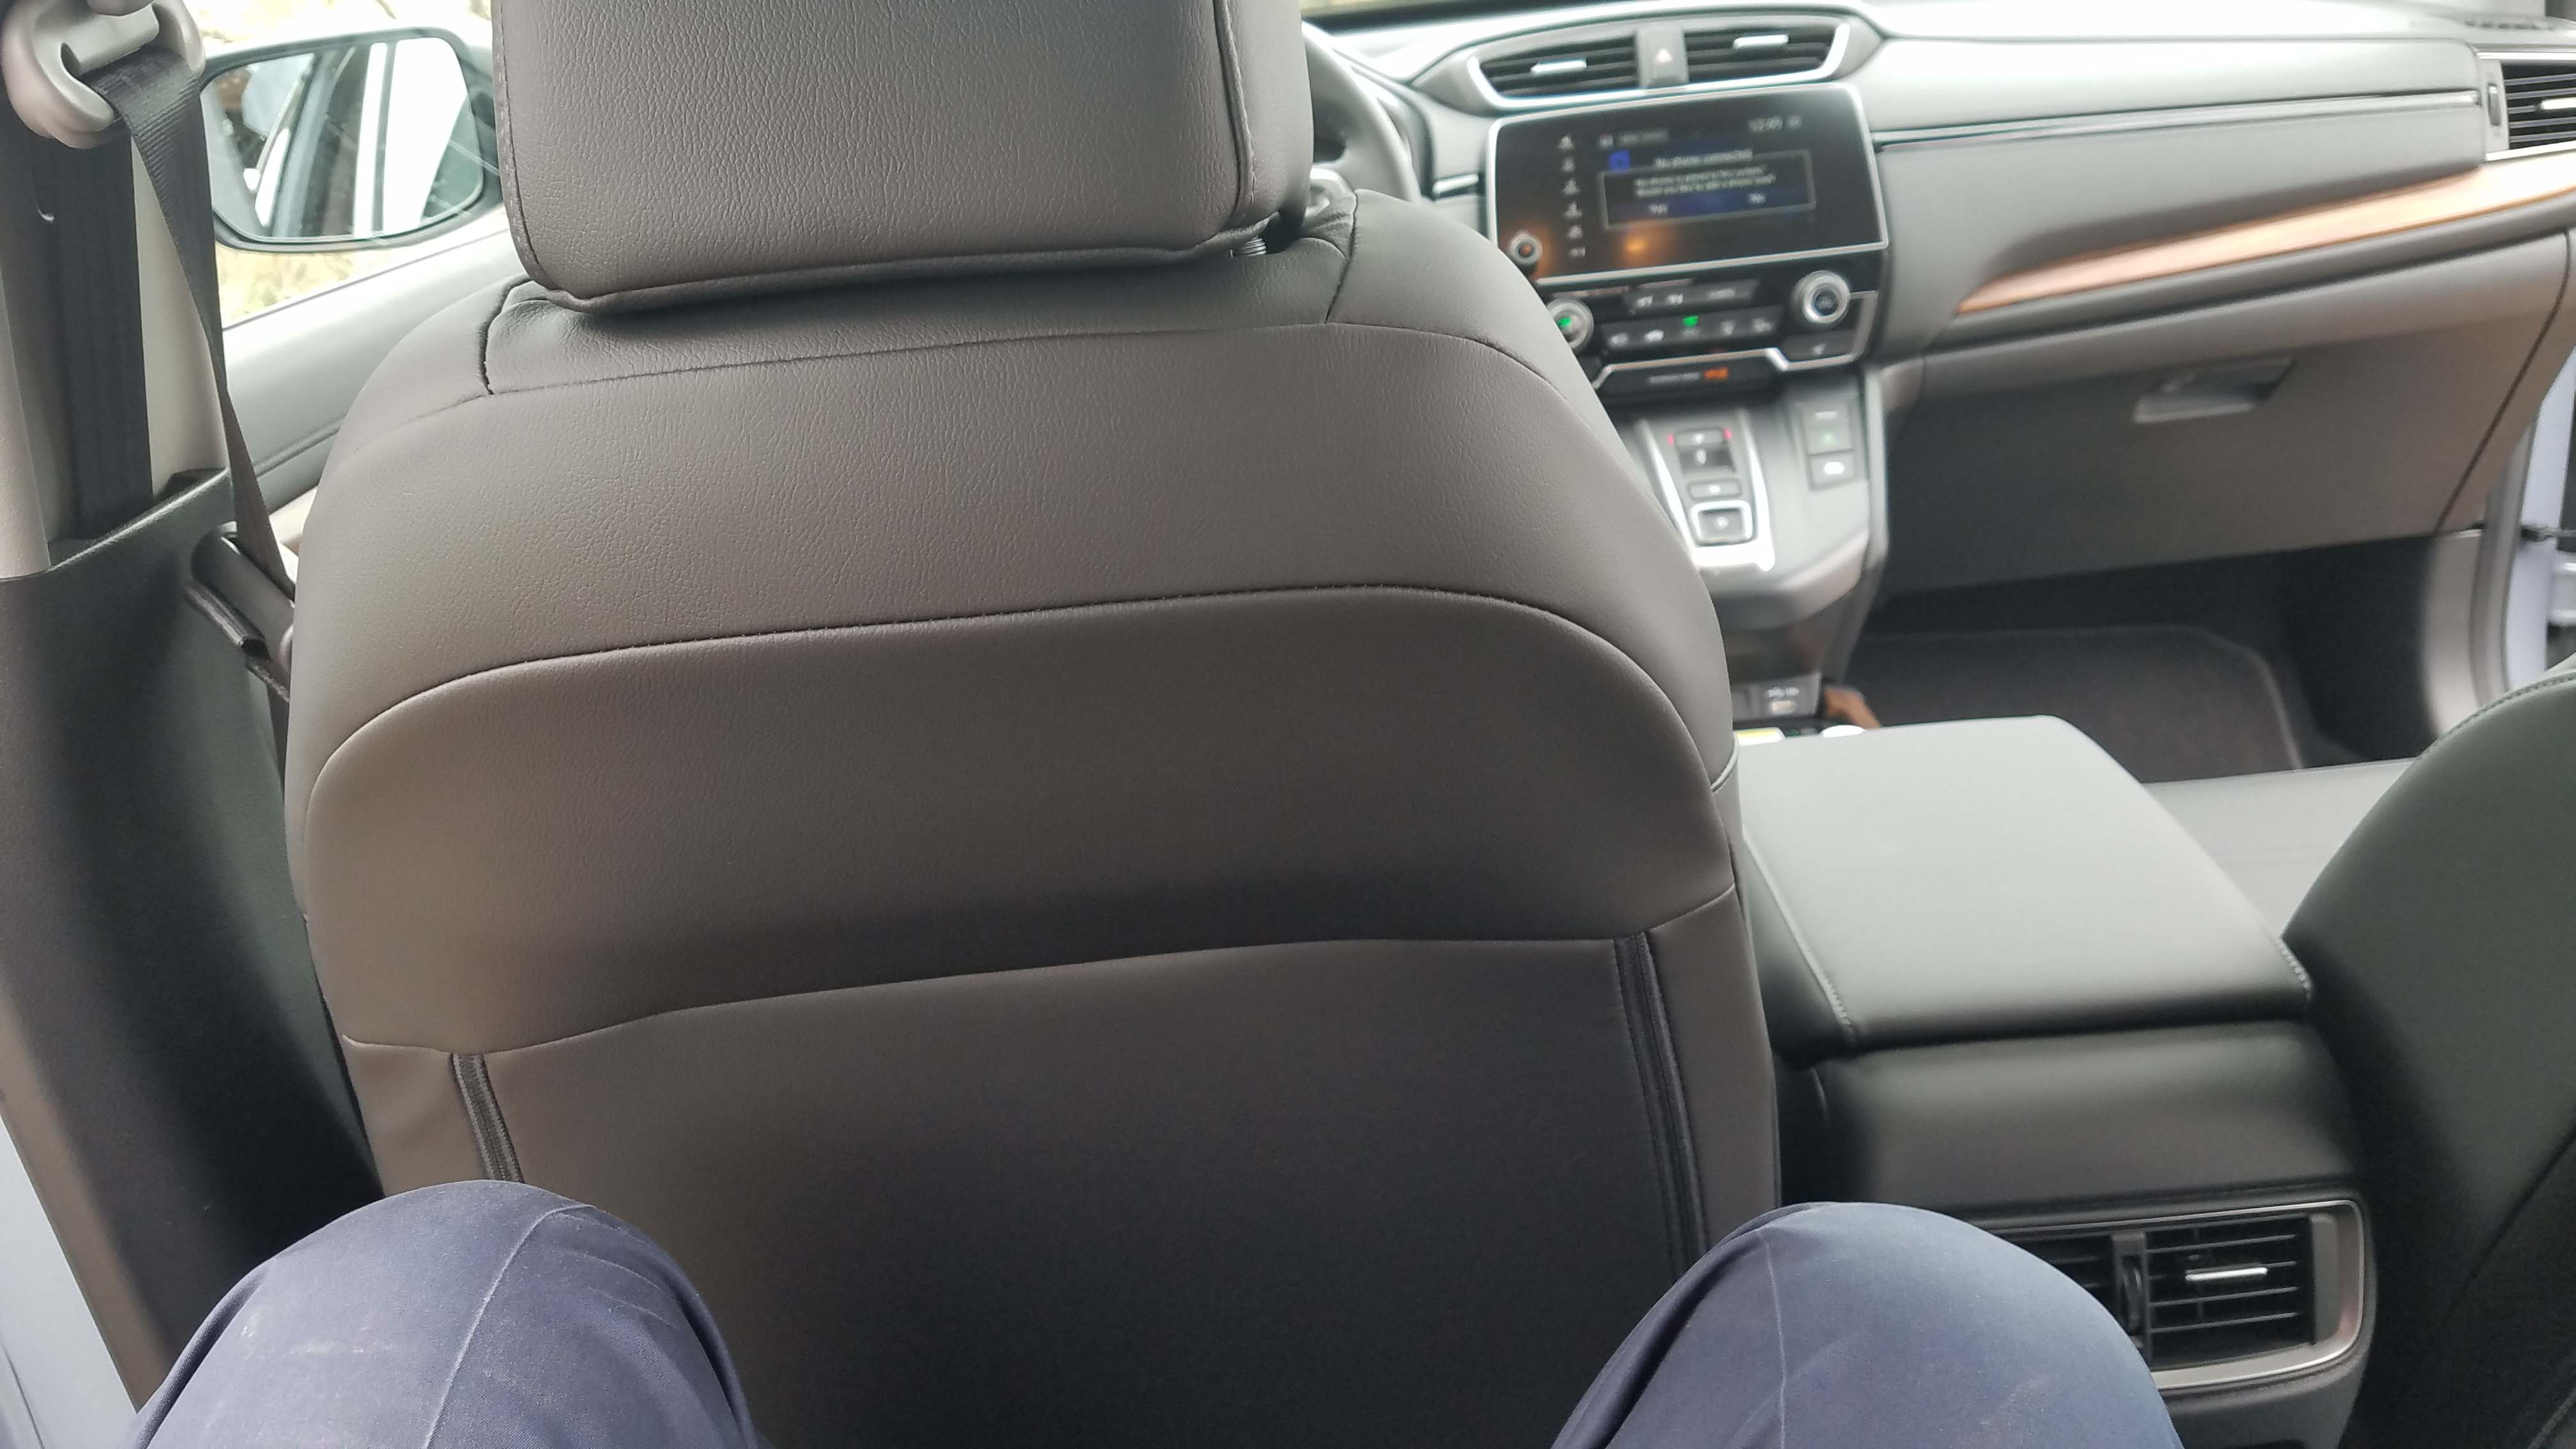 The 2020 Honda CR-V Hybrid has best-in-class rear leg room.